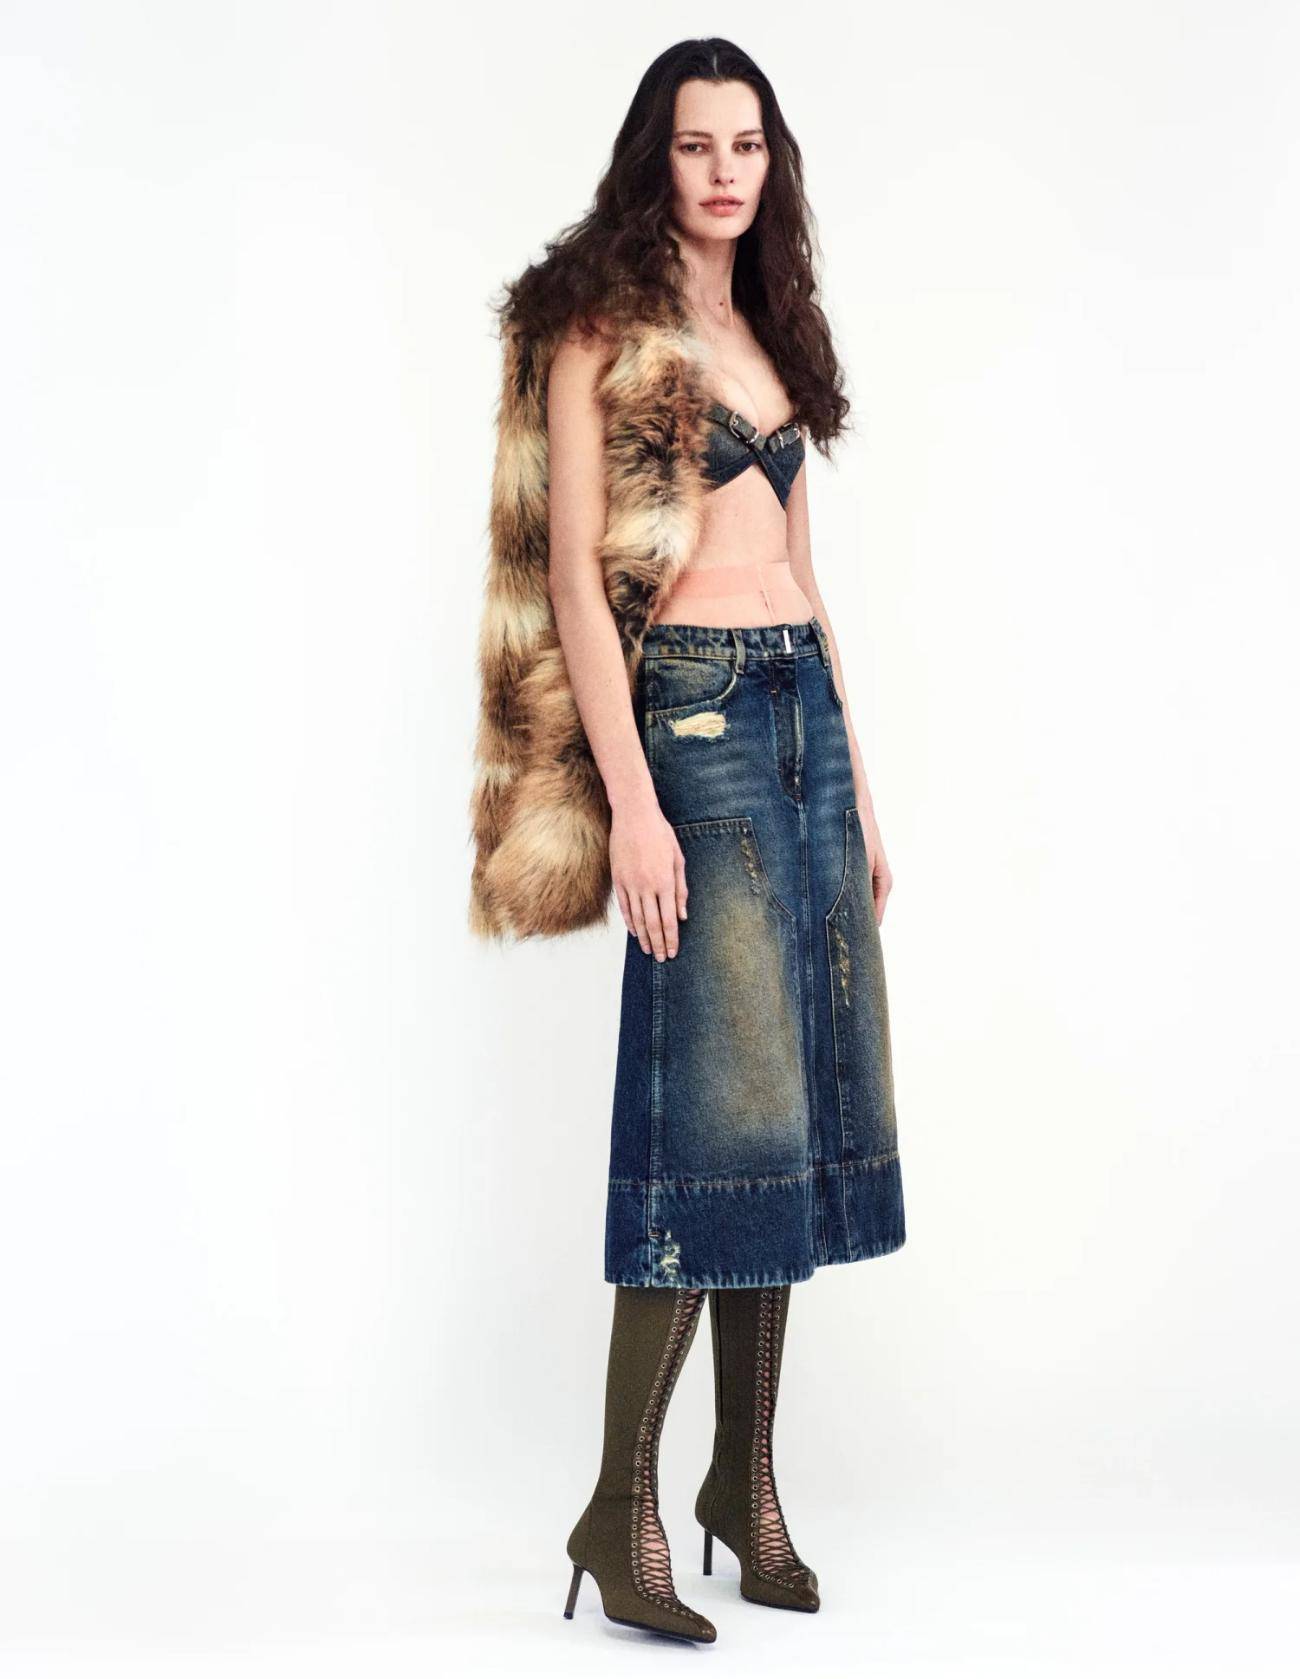 Bella Hadid Givenchy Runway Look Denim Bra and Distressed denim midi skirt 